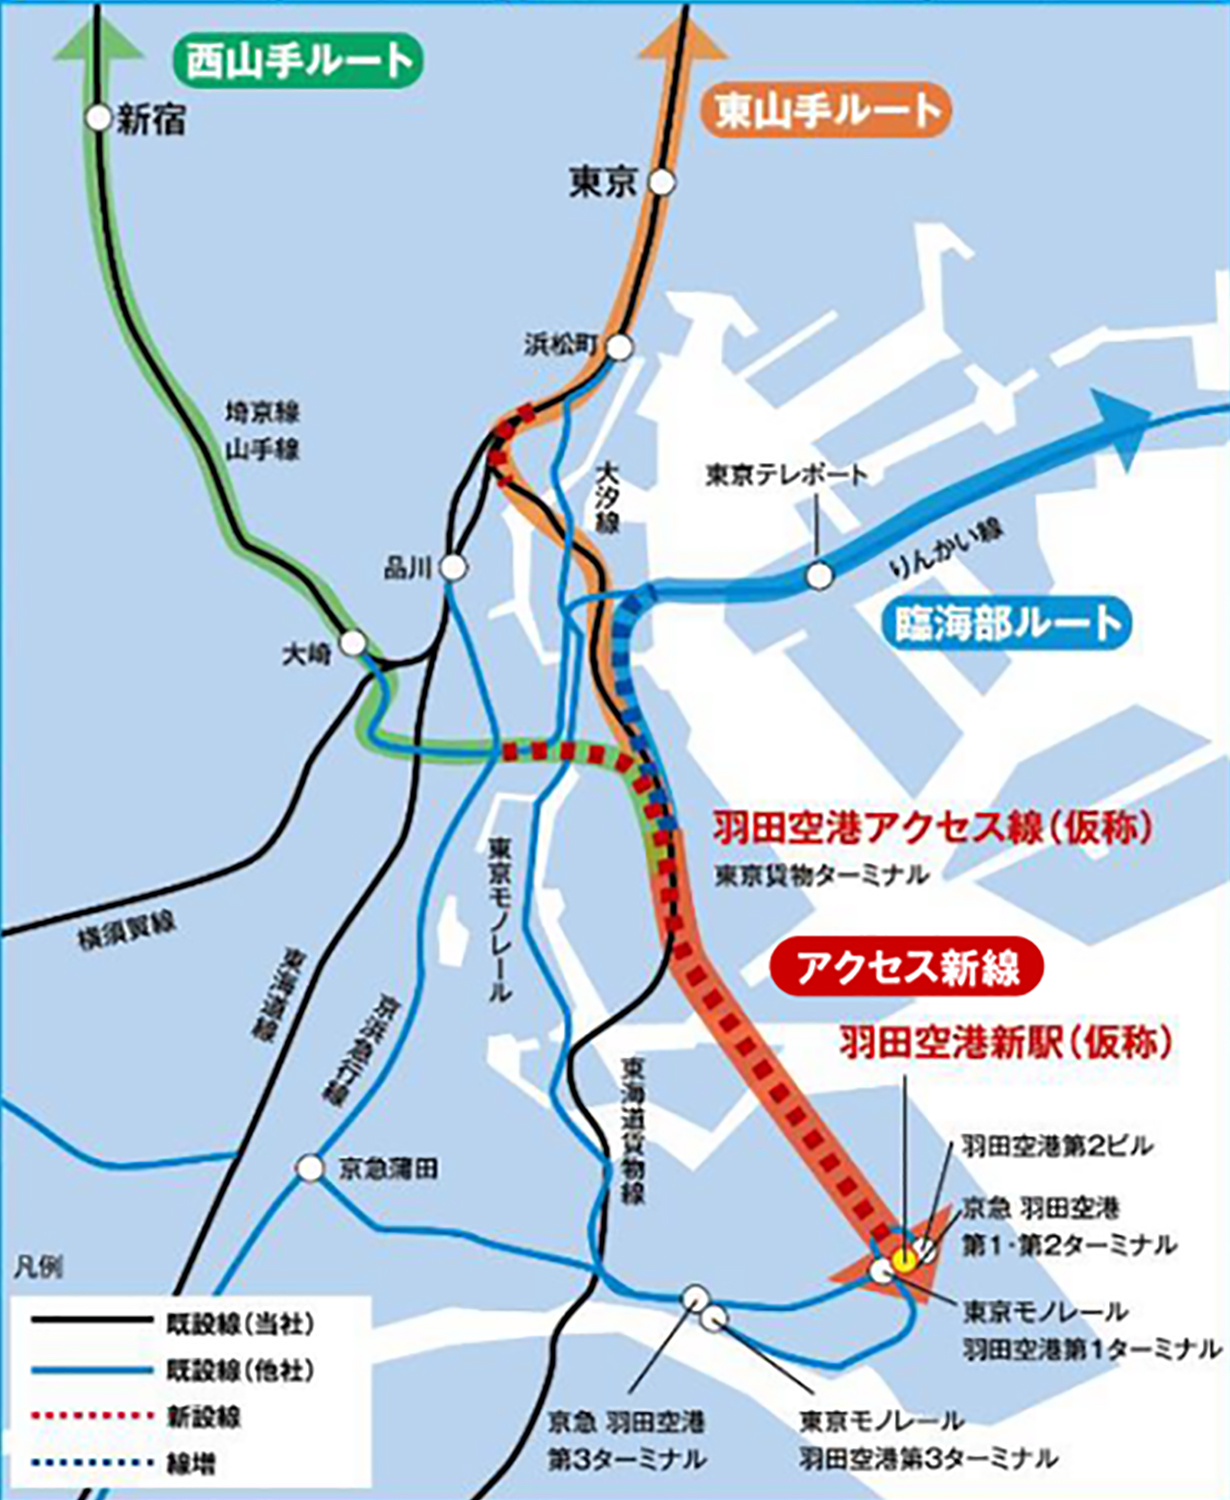 JR東日本 羽田空港アクセス線 全体計画